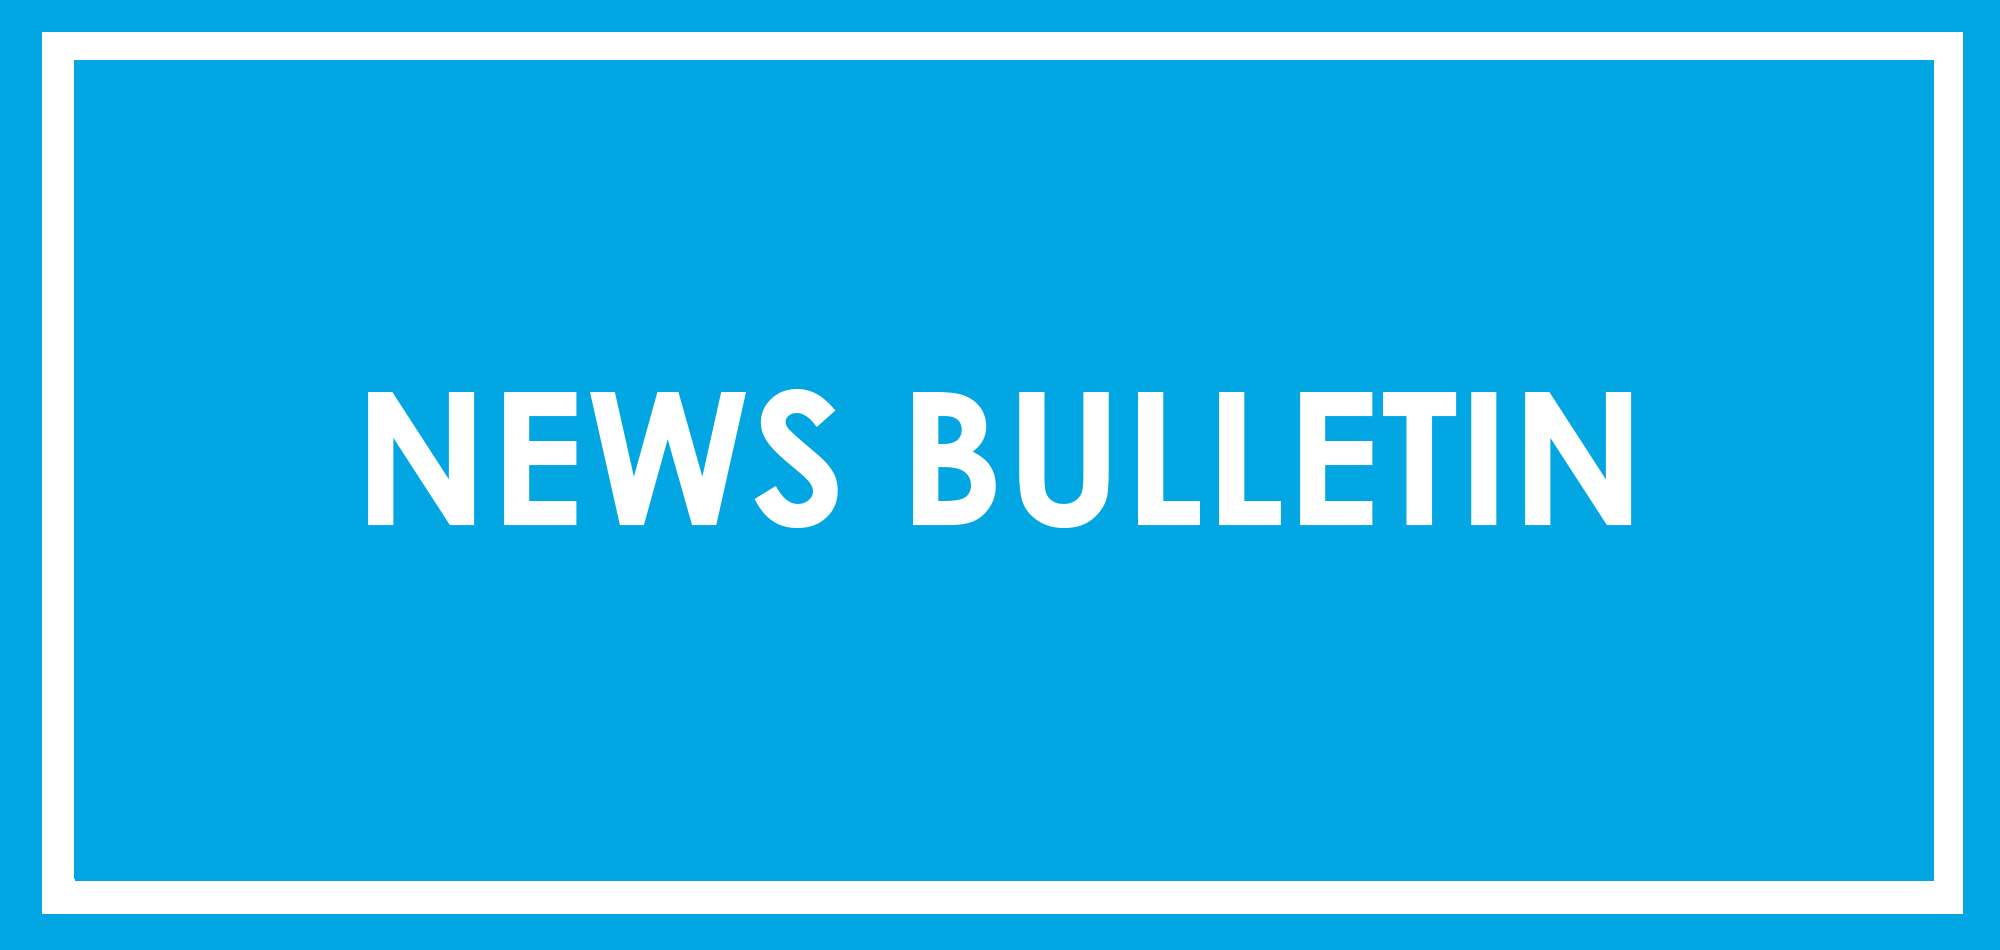 News Bulletin - 03.10.21